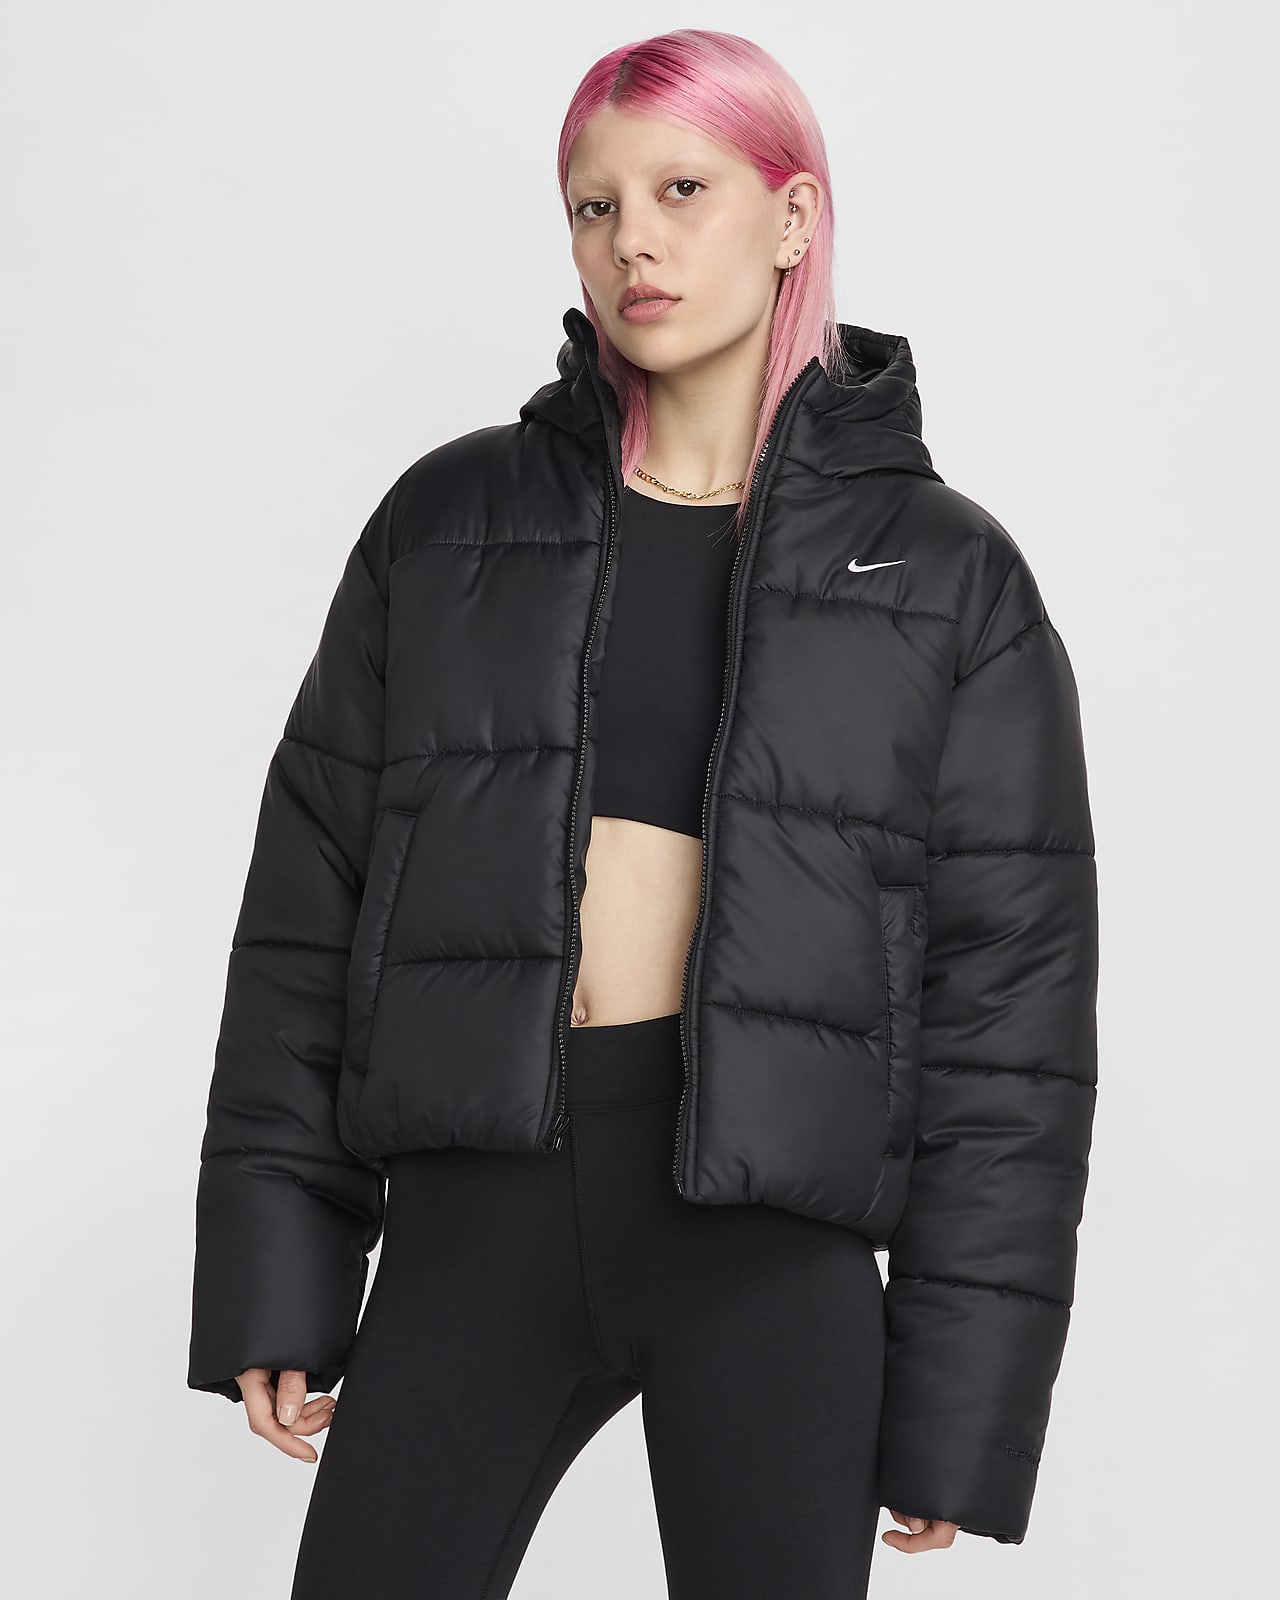 Nike Sportswear Classic Puffer lockere Therma-FIT Jacke mit Kapuze für Damen